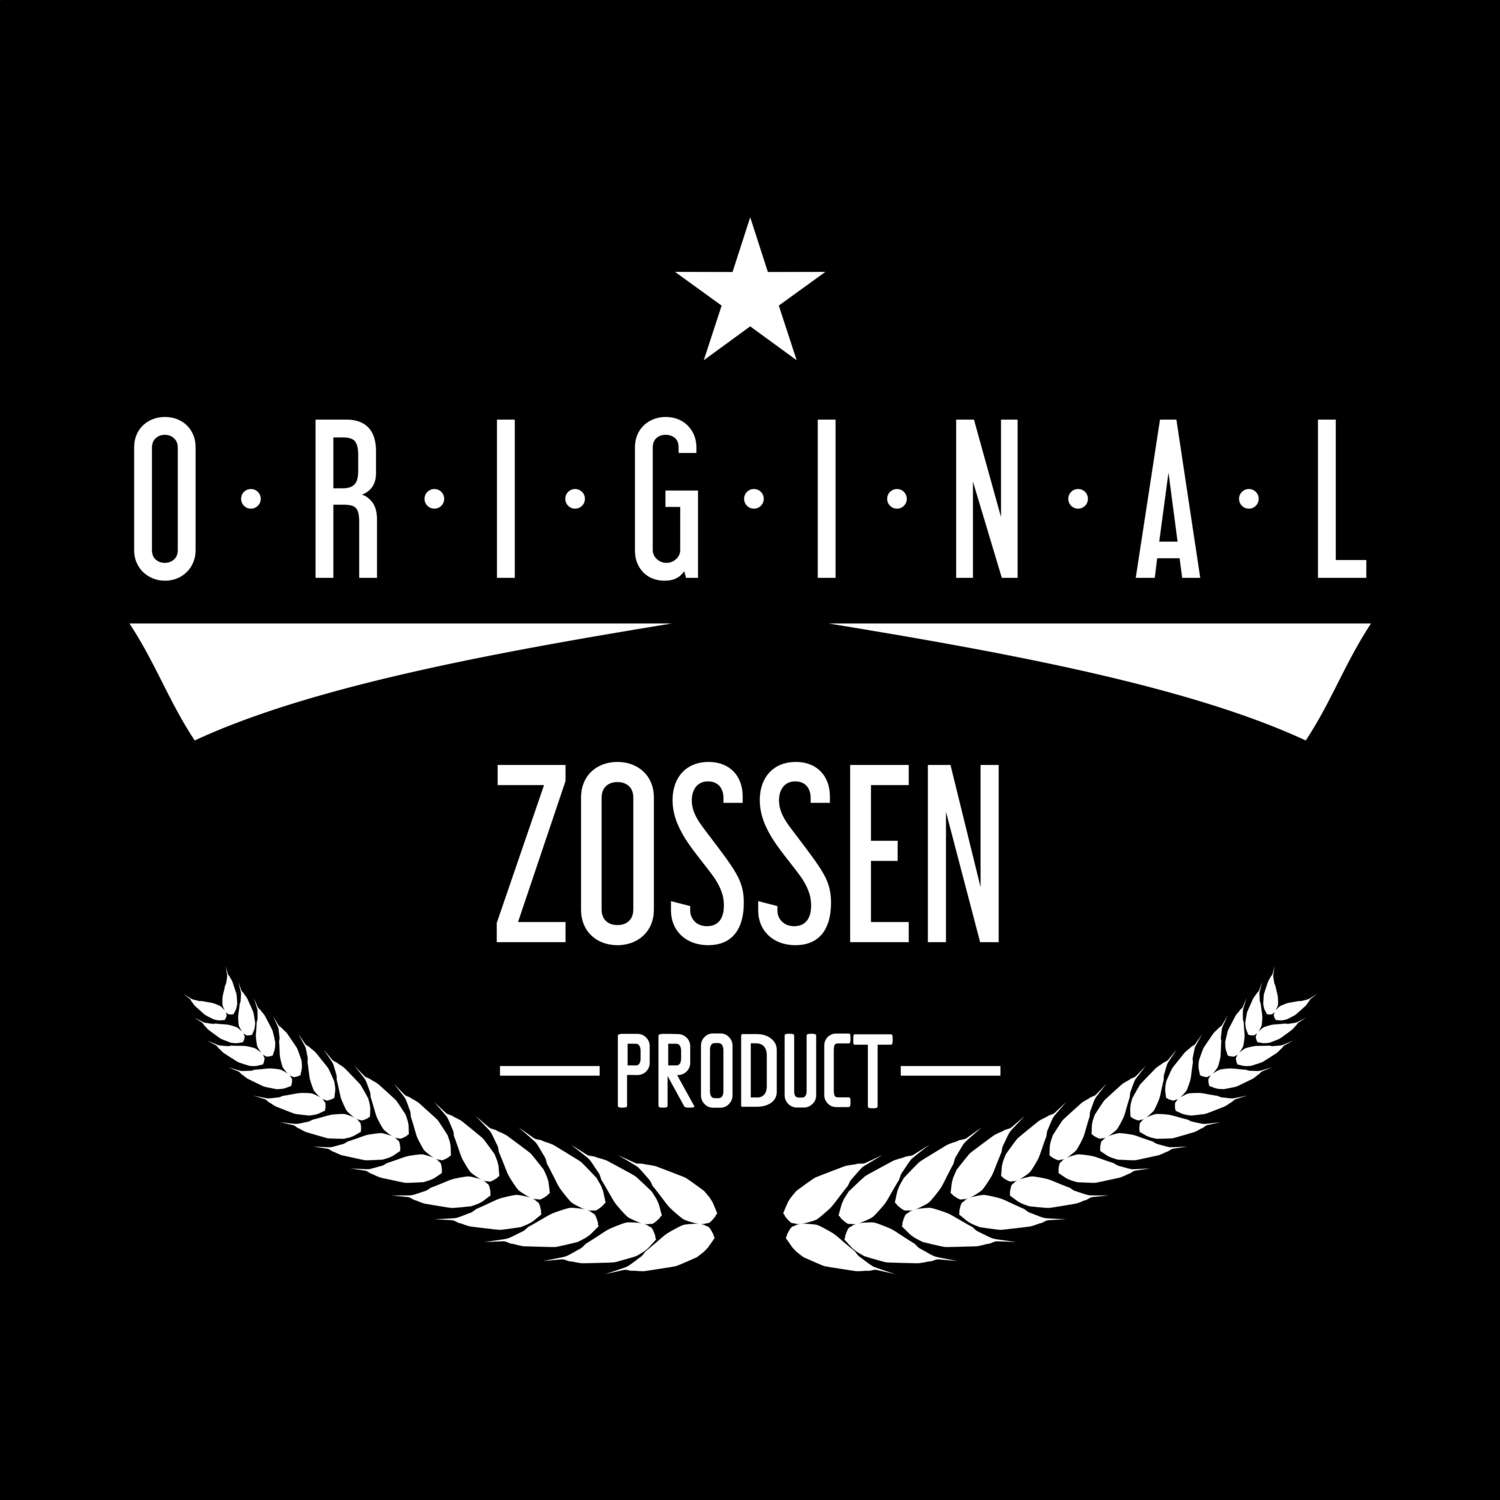 Zossen T-Shirt »Original Product«